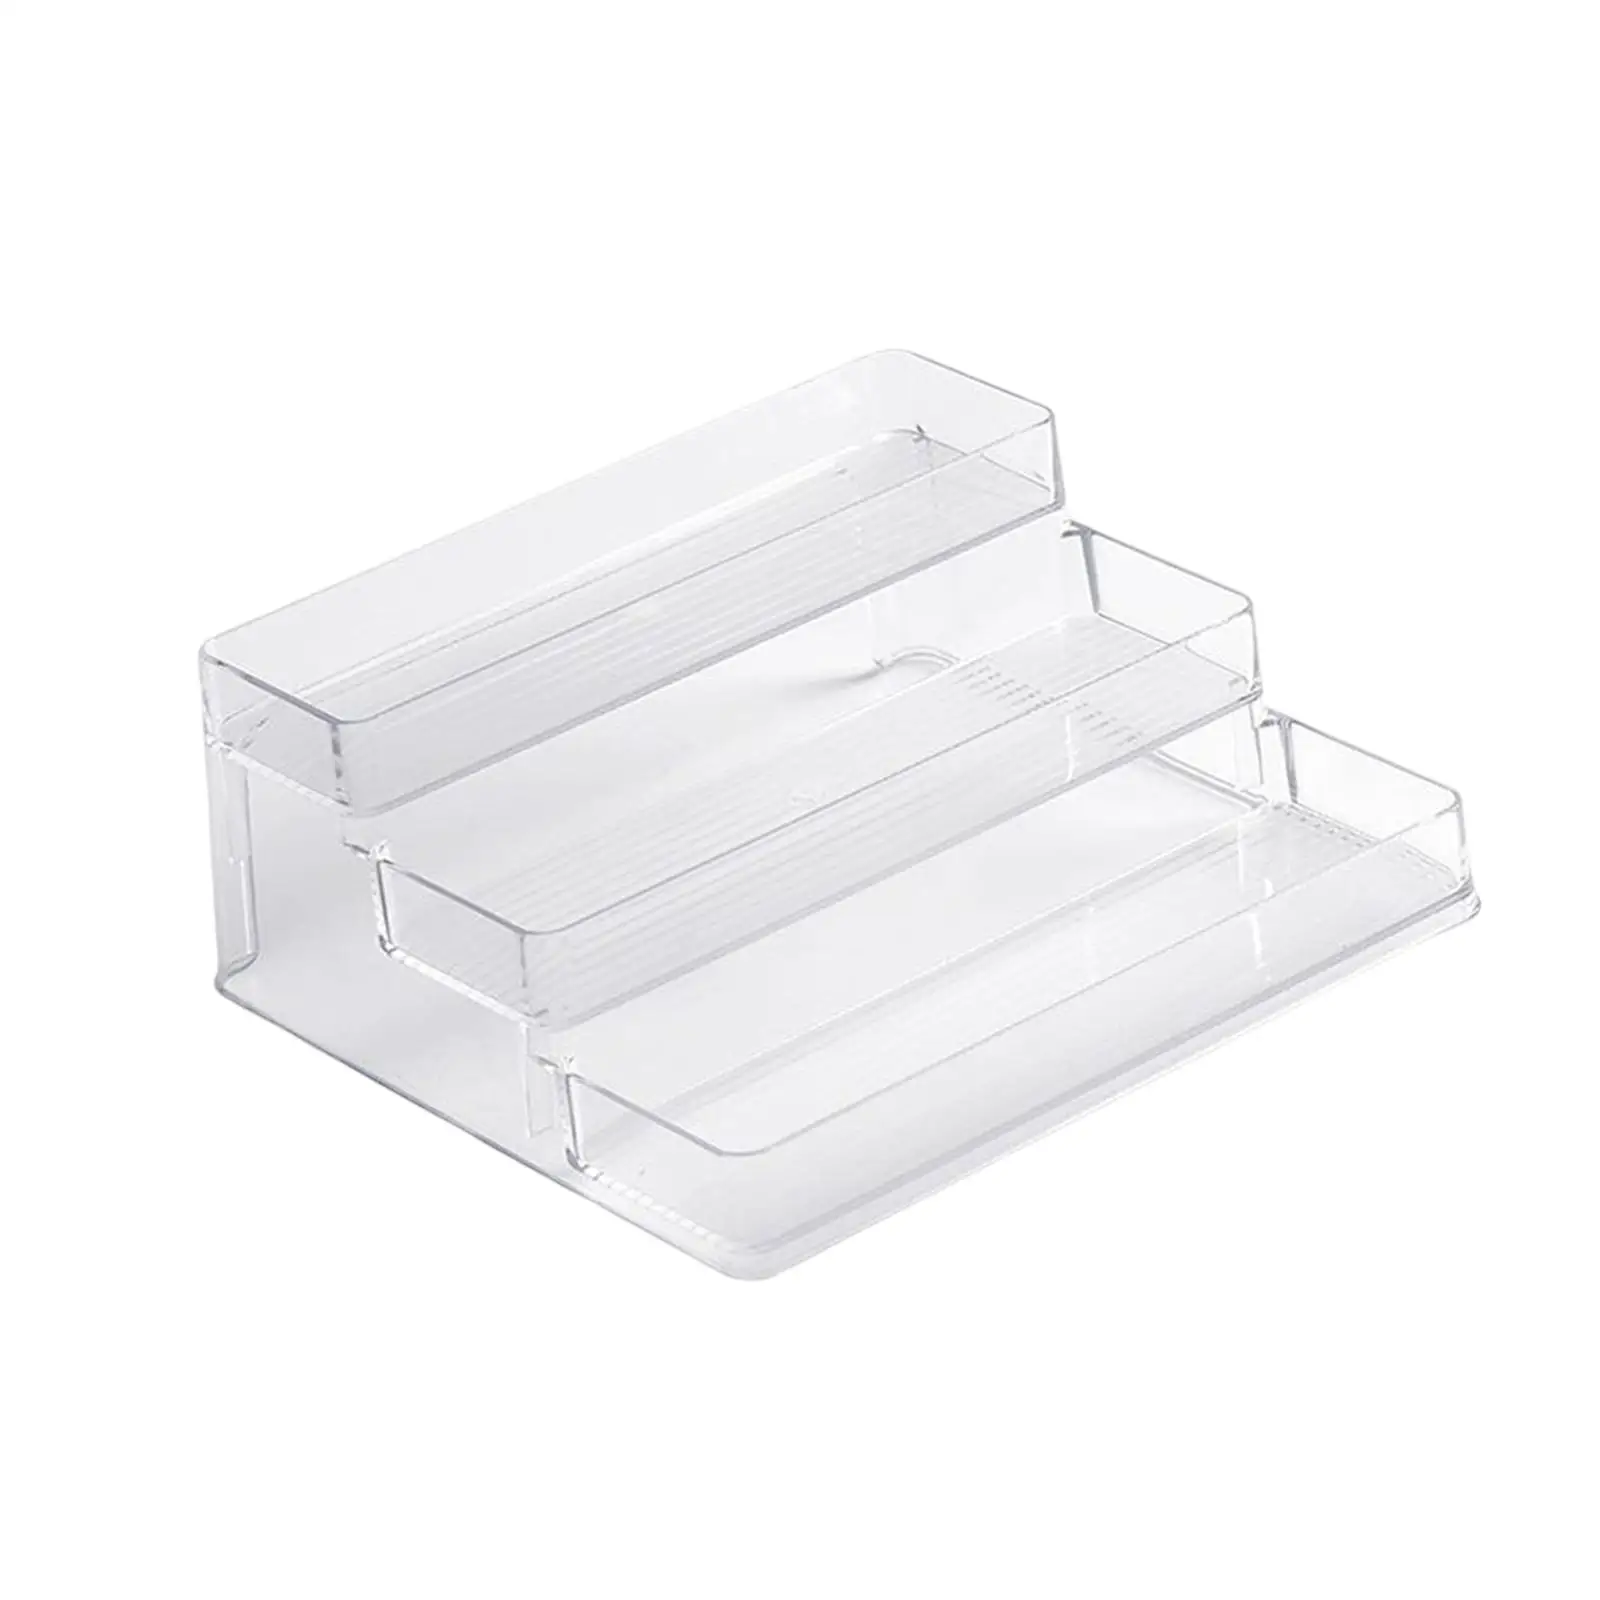 Clear Nail Polish Stand Shelf Organizer 3 Layers Accessory Wide Usage Multipurpose Use